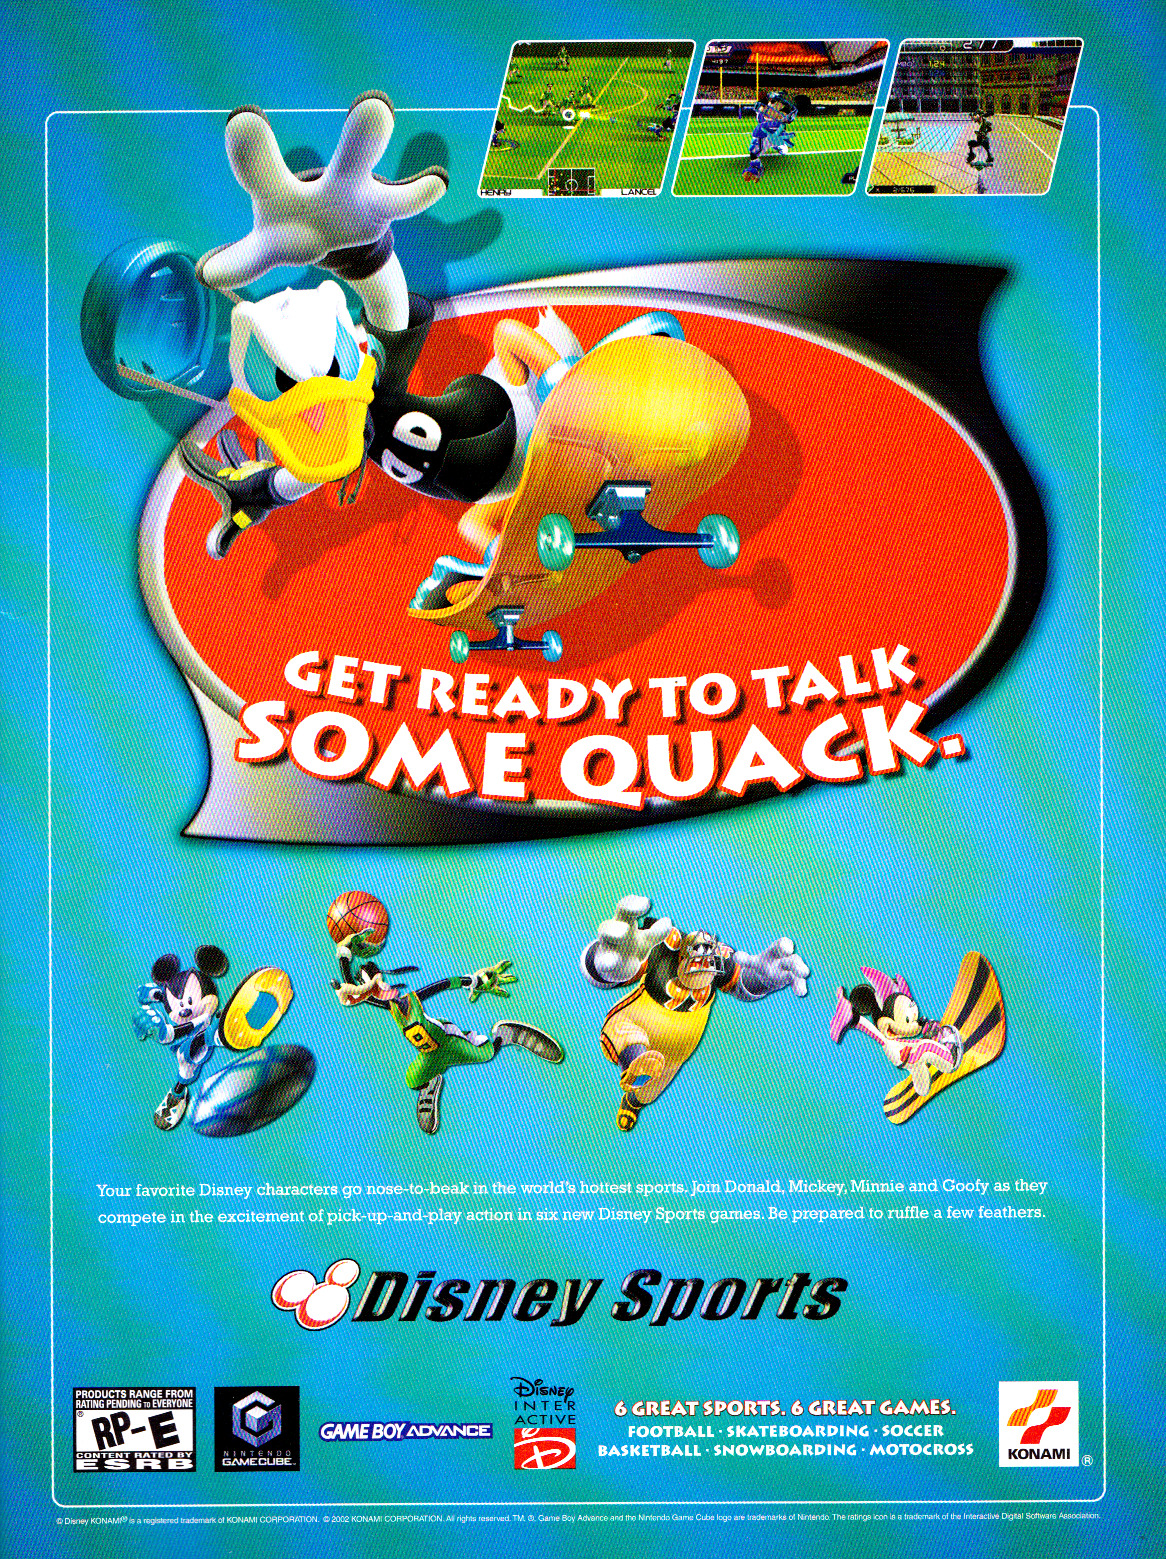 “Disney Sports”
• GamePro, January 2003 (#172)